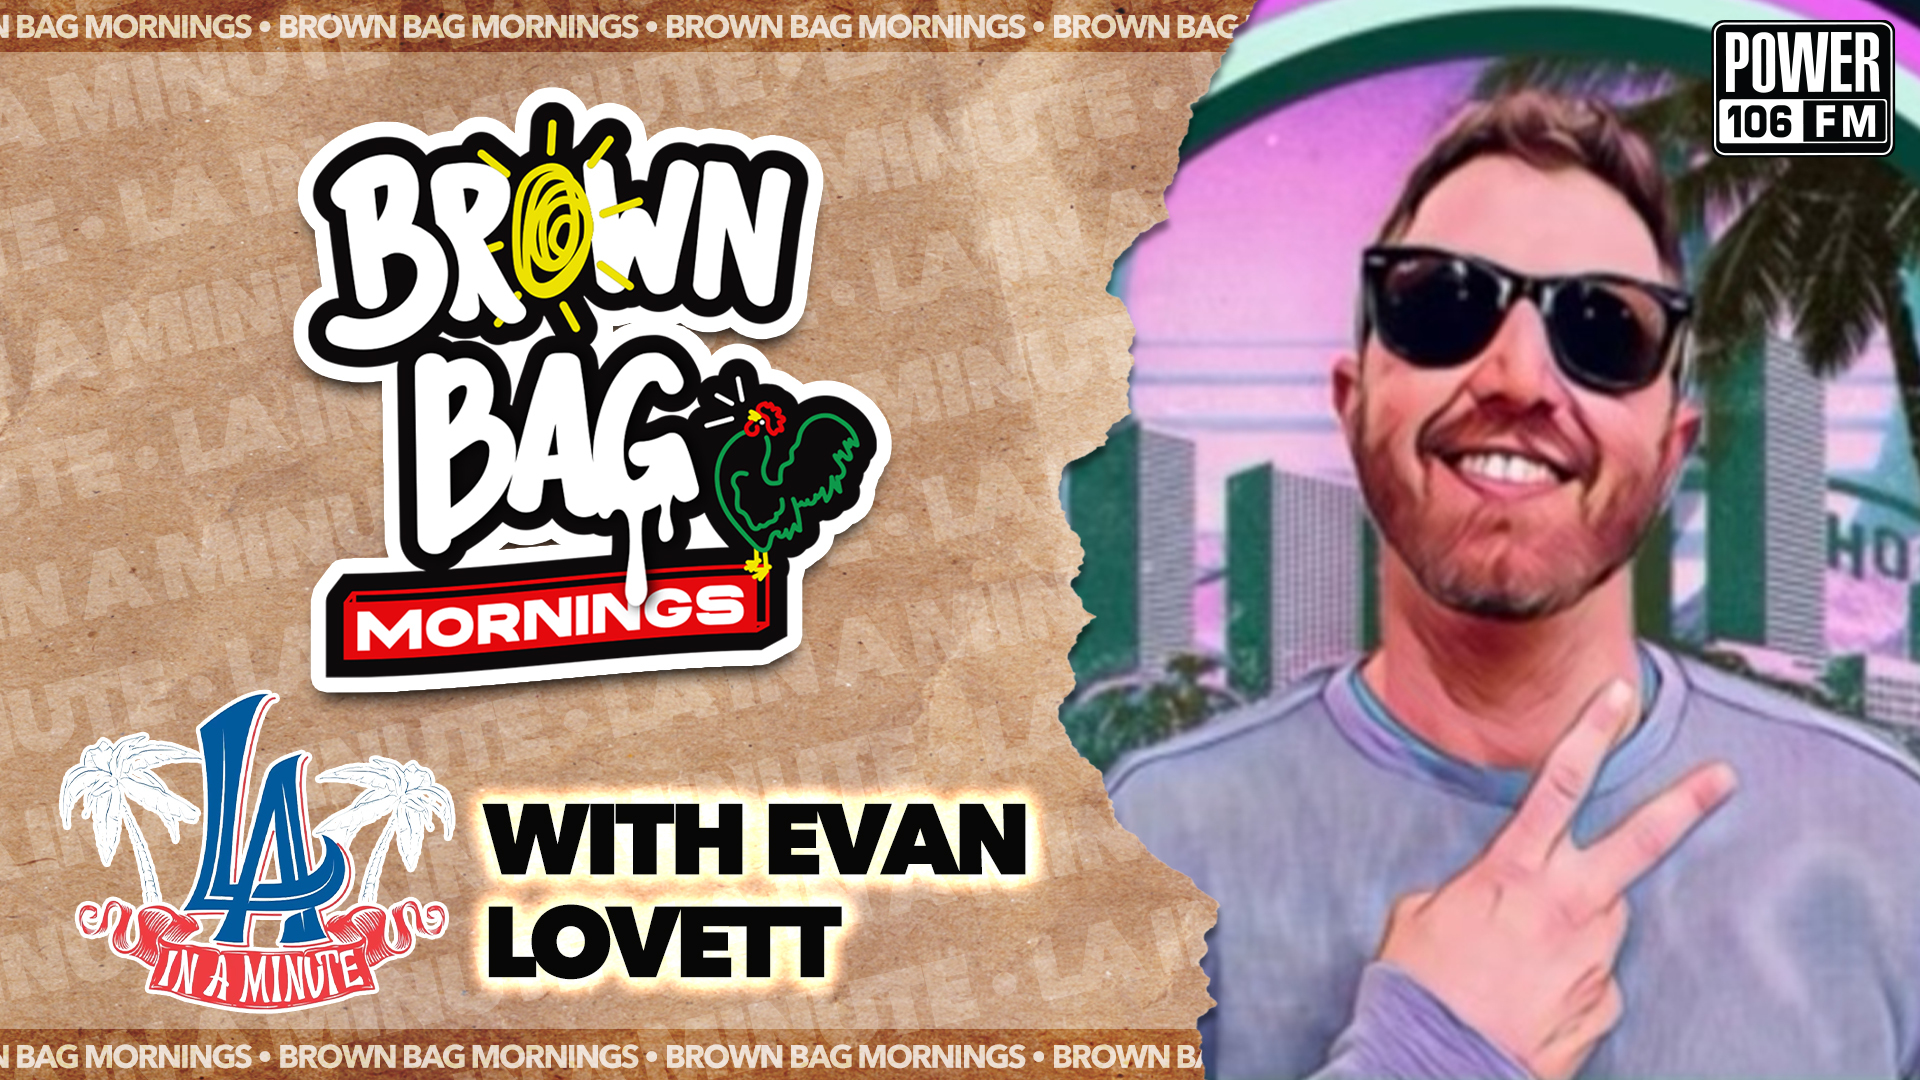 Evan Lovett Joins Power 106’s Brown Bag Mornings to Celebrate “LA in a Minute”